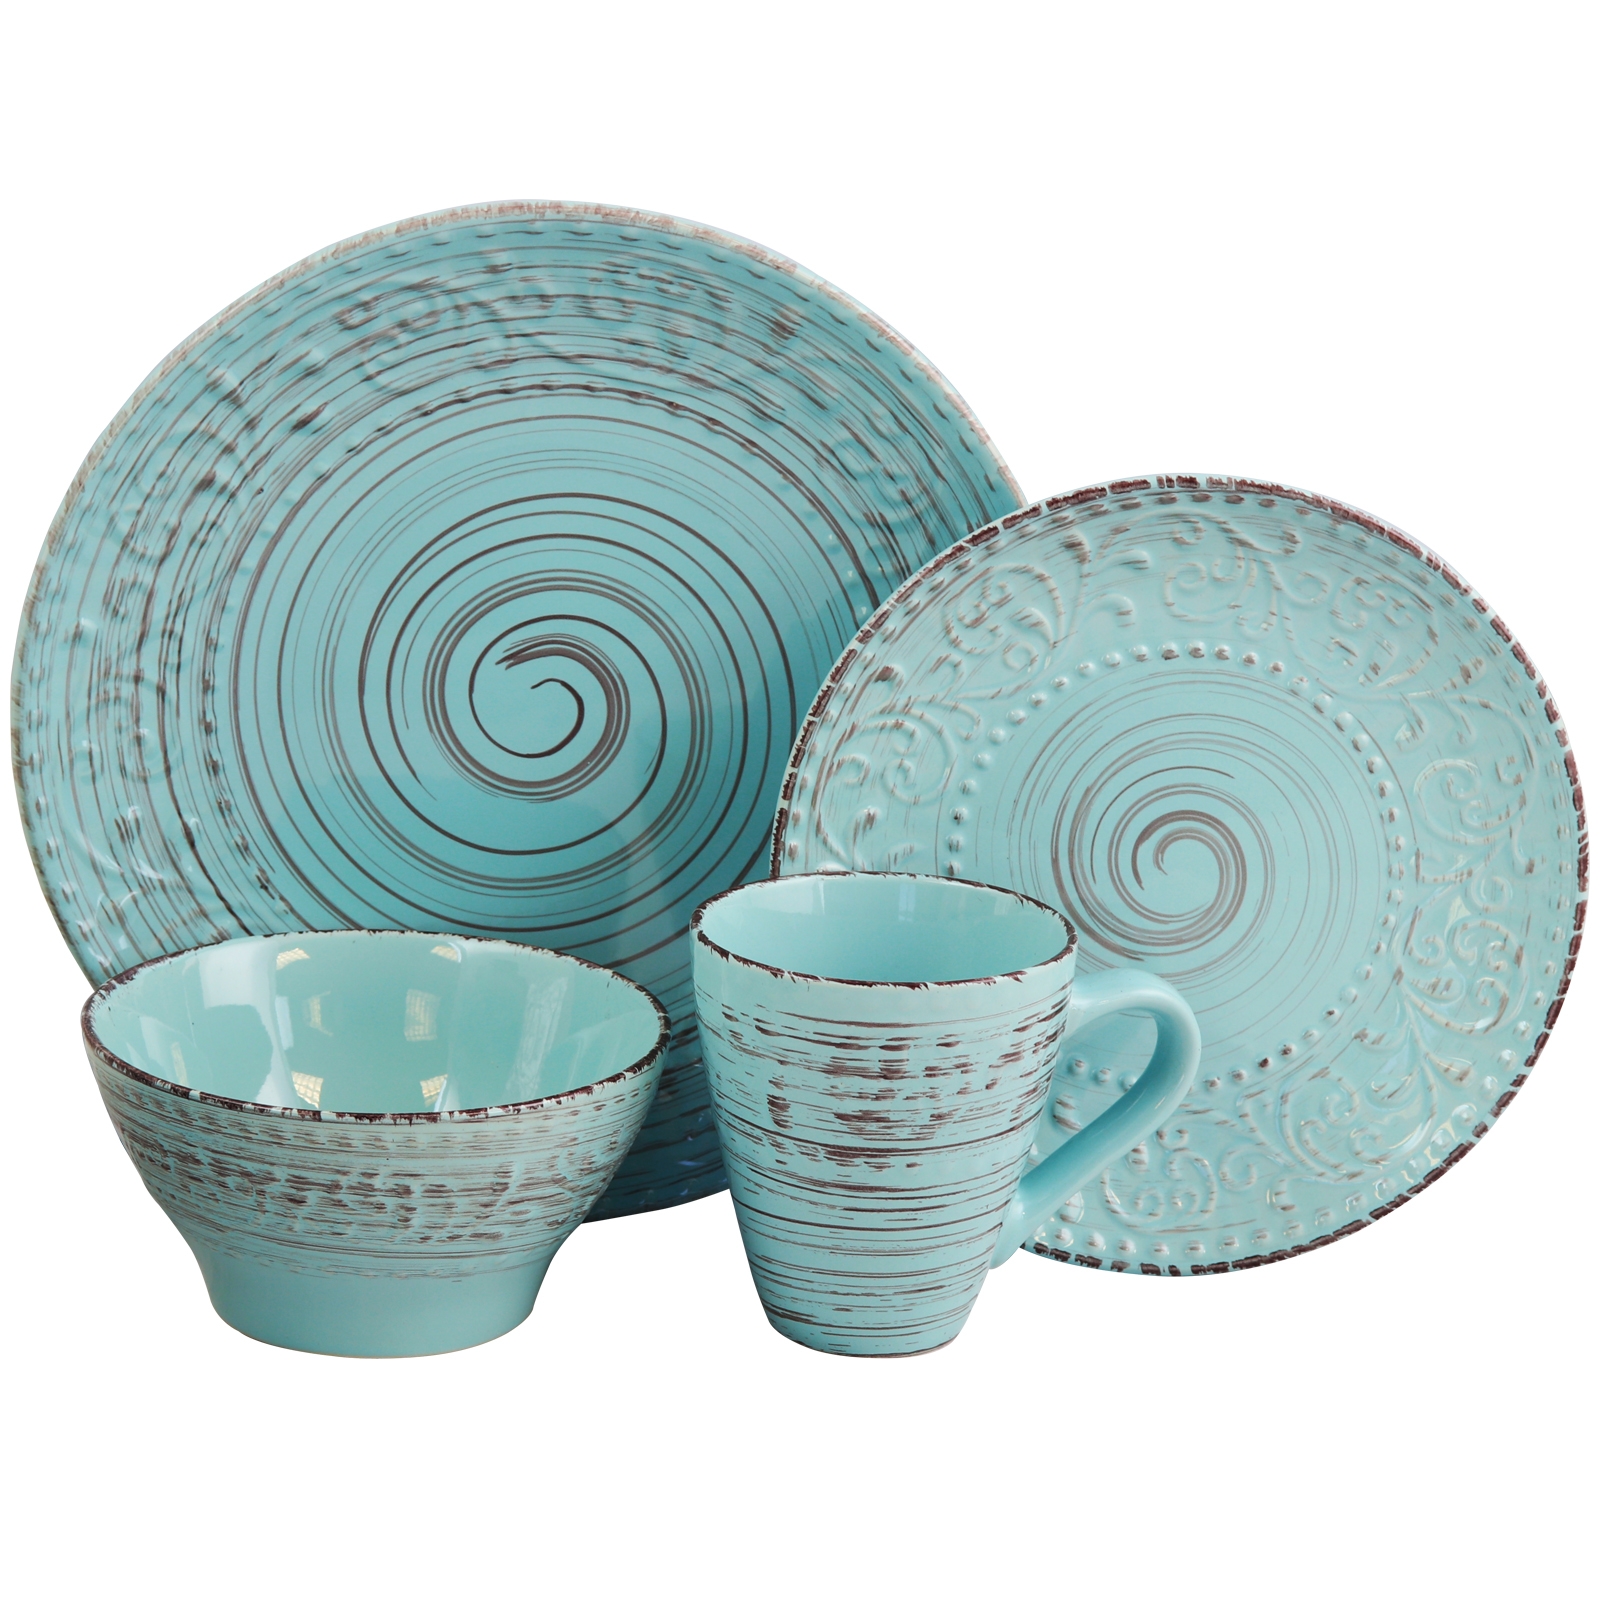 Elama Malibu Waves 16-Piece Dinnerware Set in Turquoise - image 2 of 5